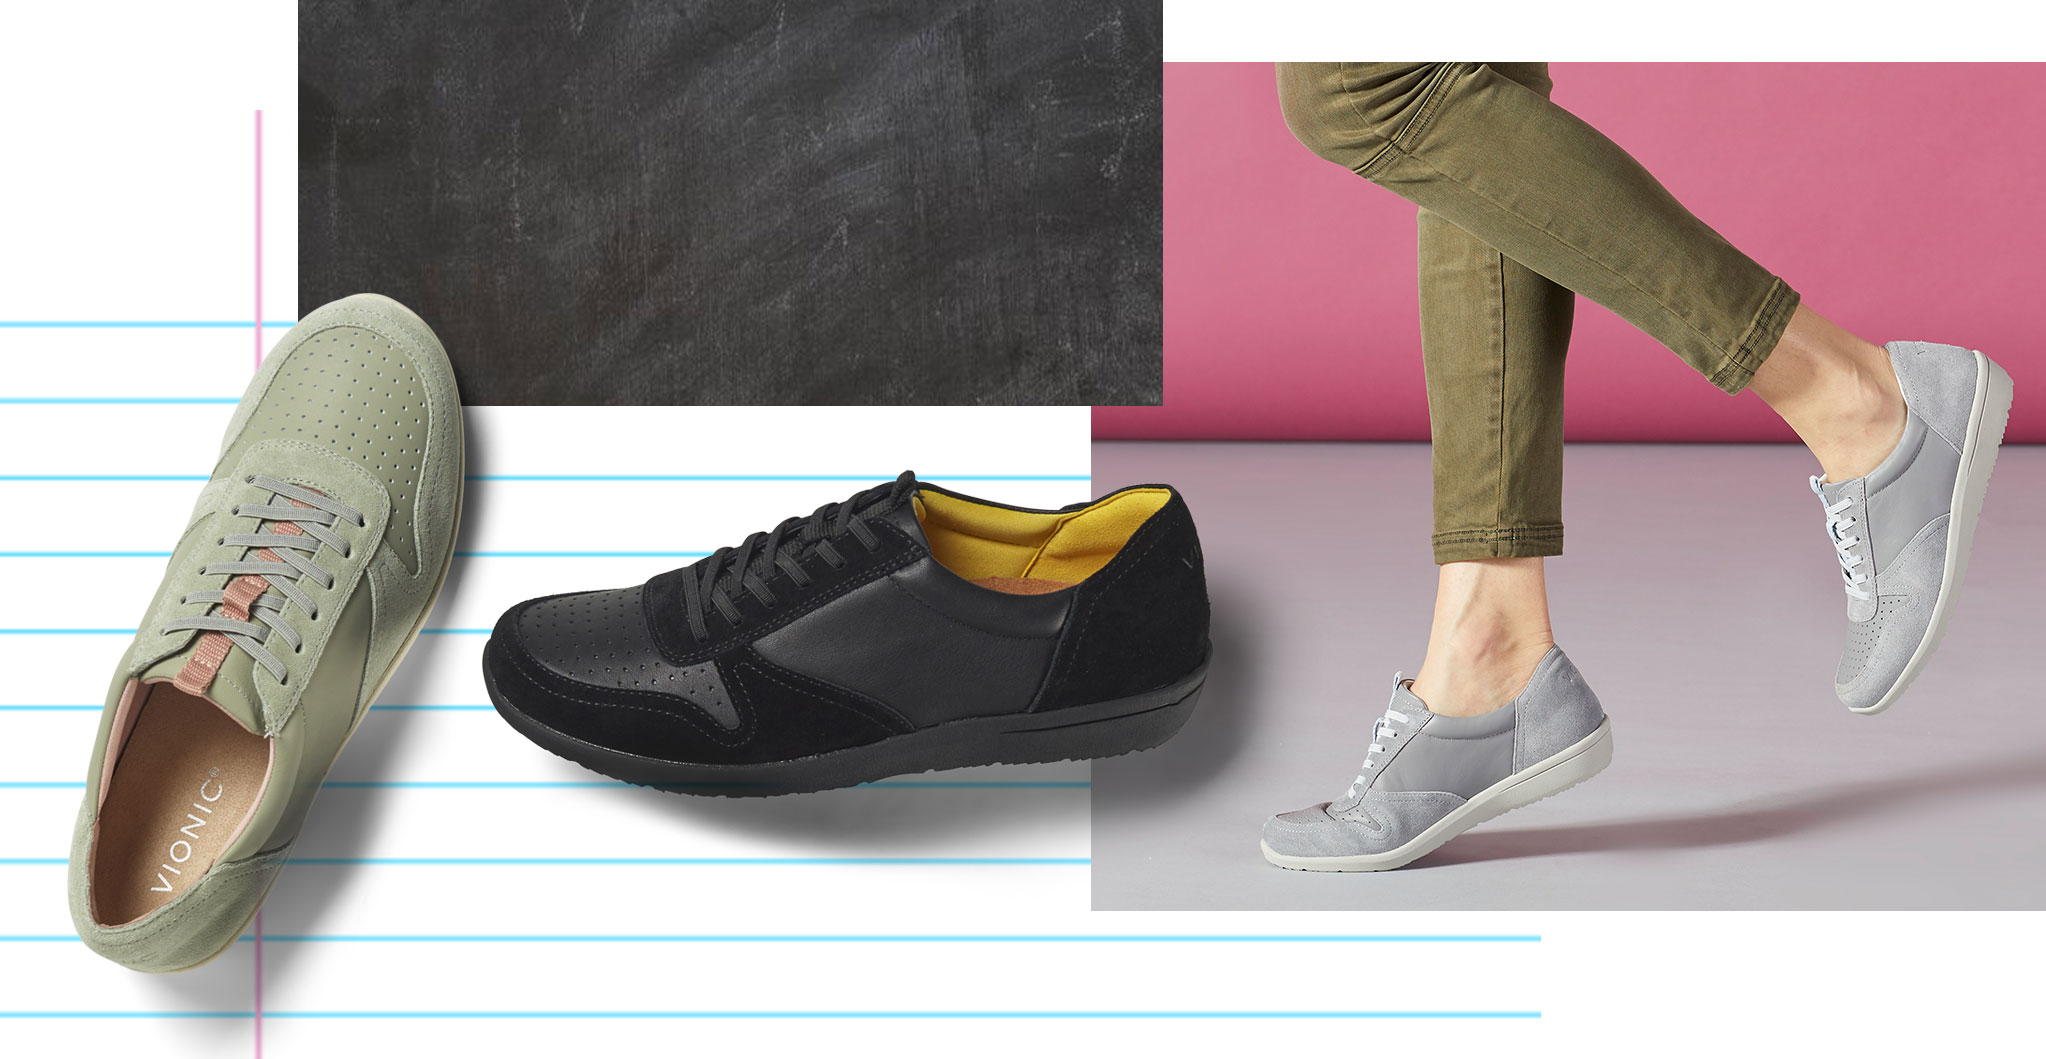 Vionic Shoes: Comfortable Stylish Shoes, Sandals, Boots & More